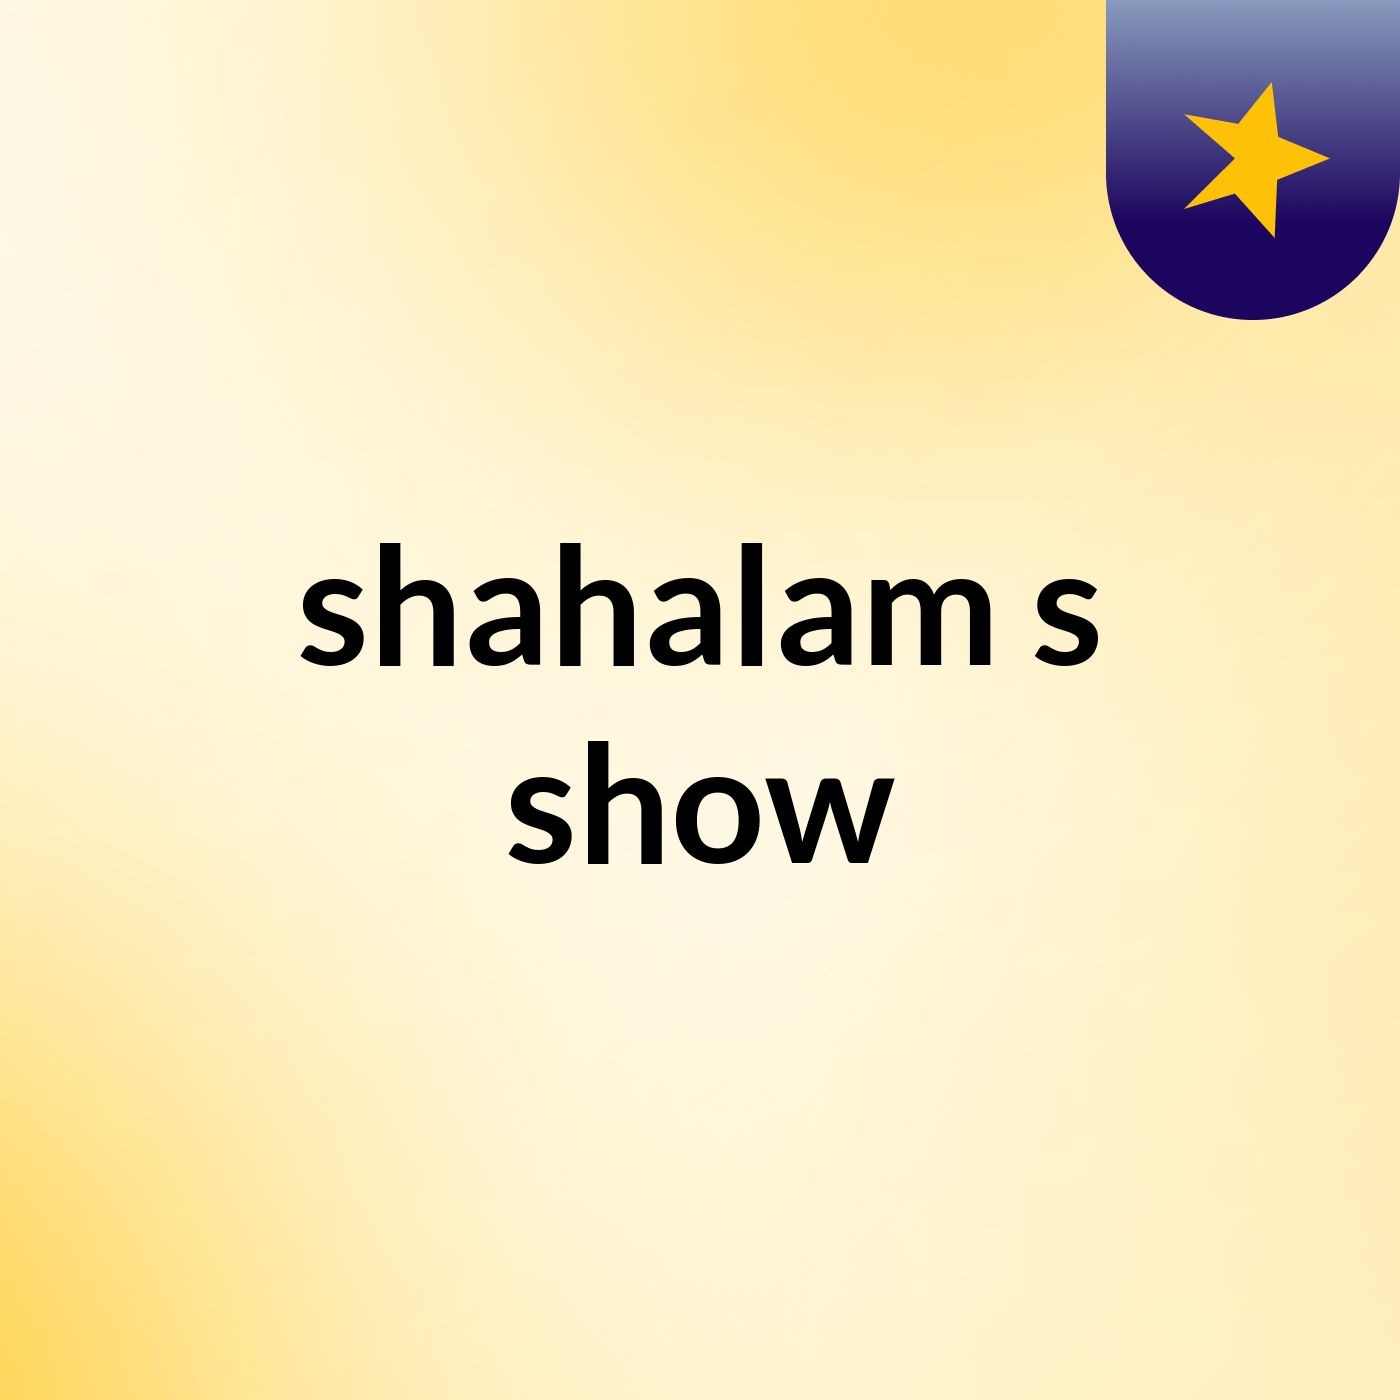 shahalam's show